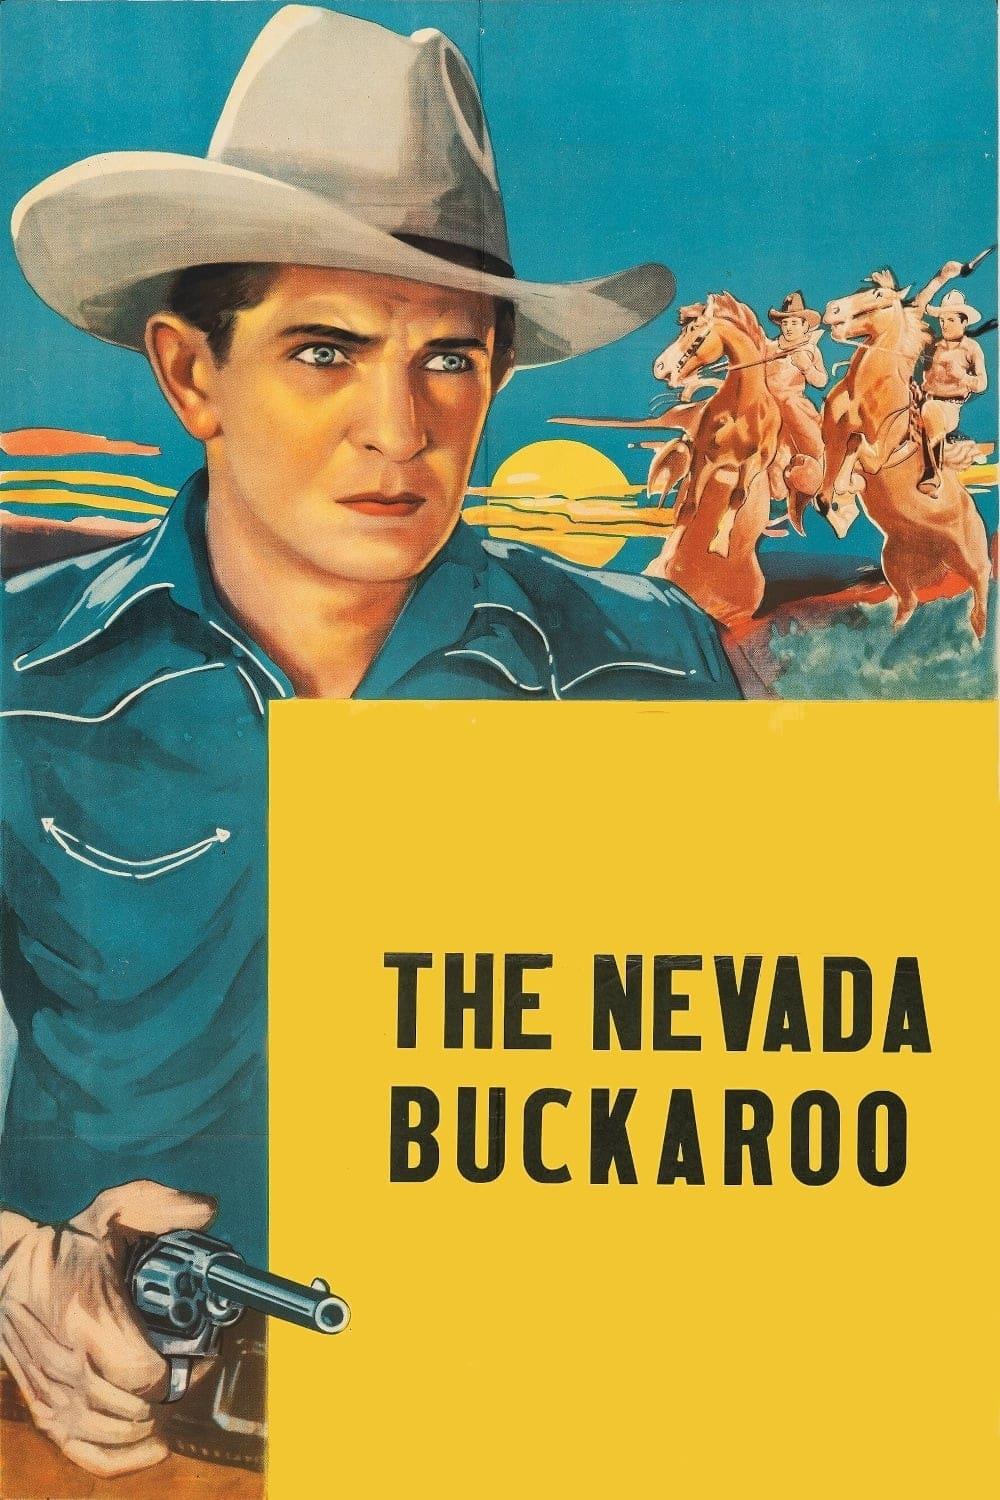 The Nevada Buckaroo poster